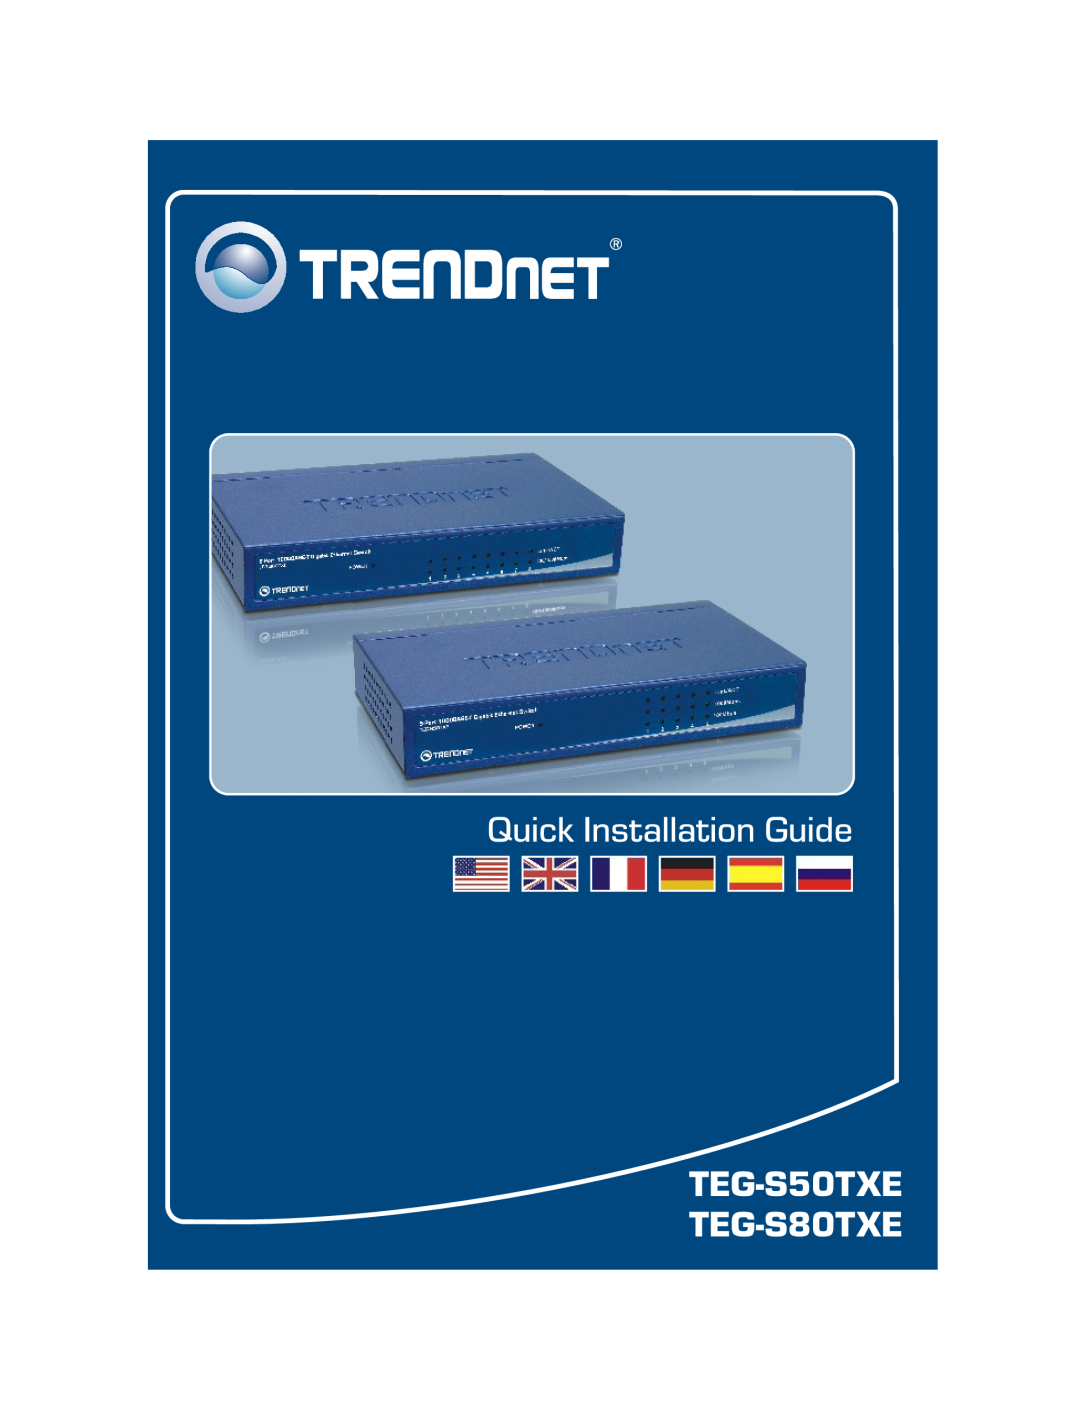 TRENDnet Gigabyte Ethernet Switch with External Power Supply manual Quick Installation Guide, TEG-S50TXE TEG-S80TXE 